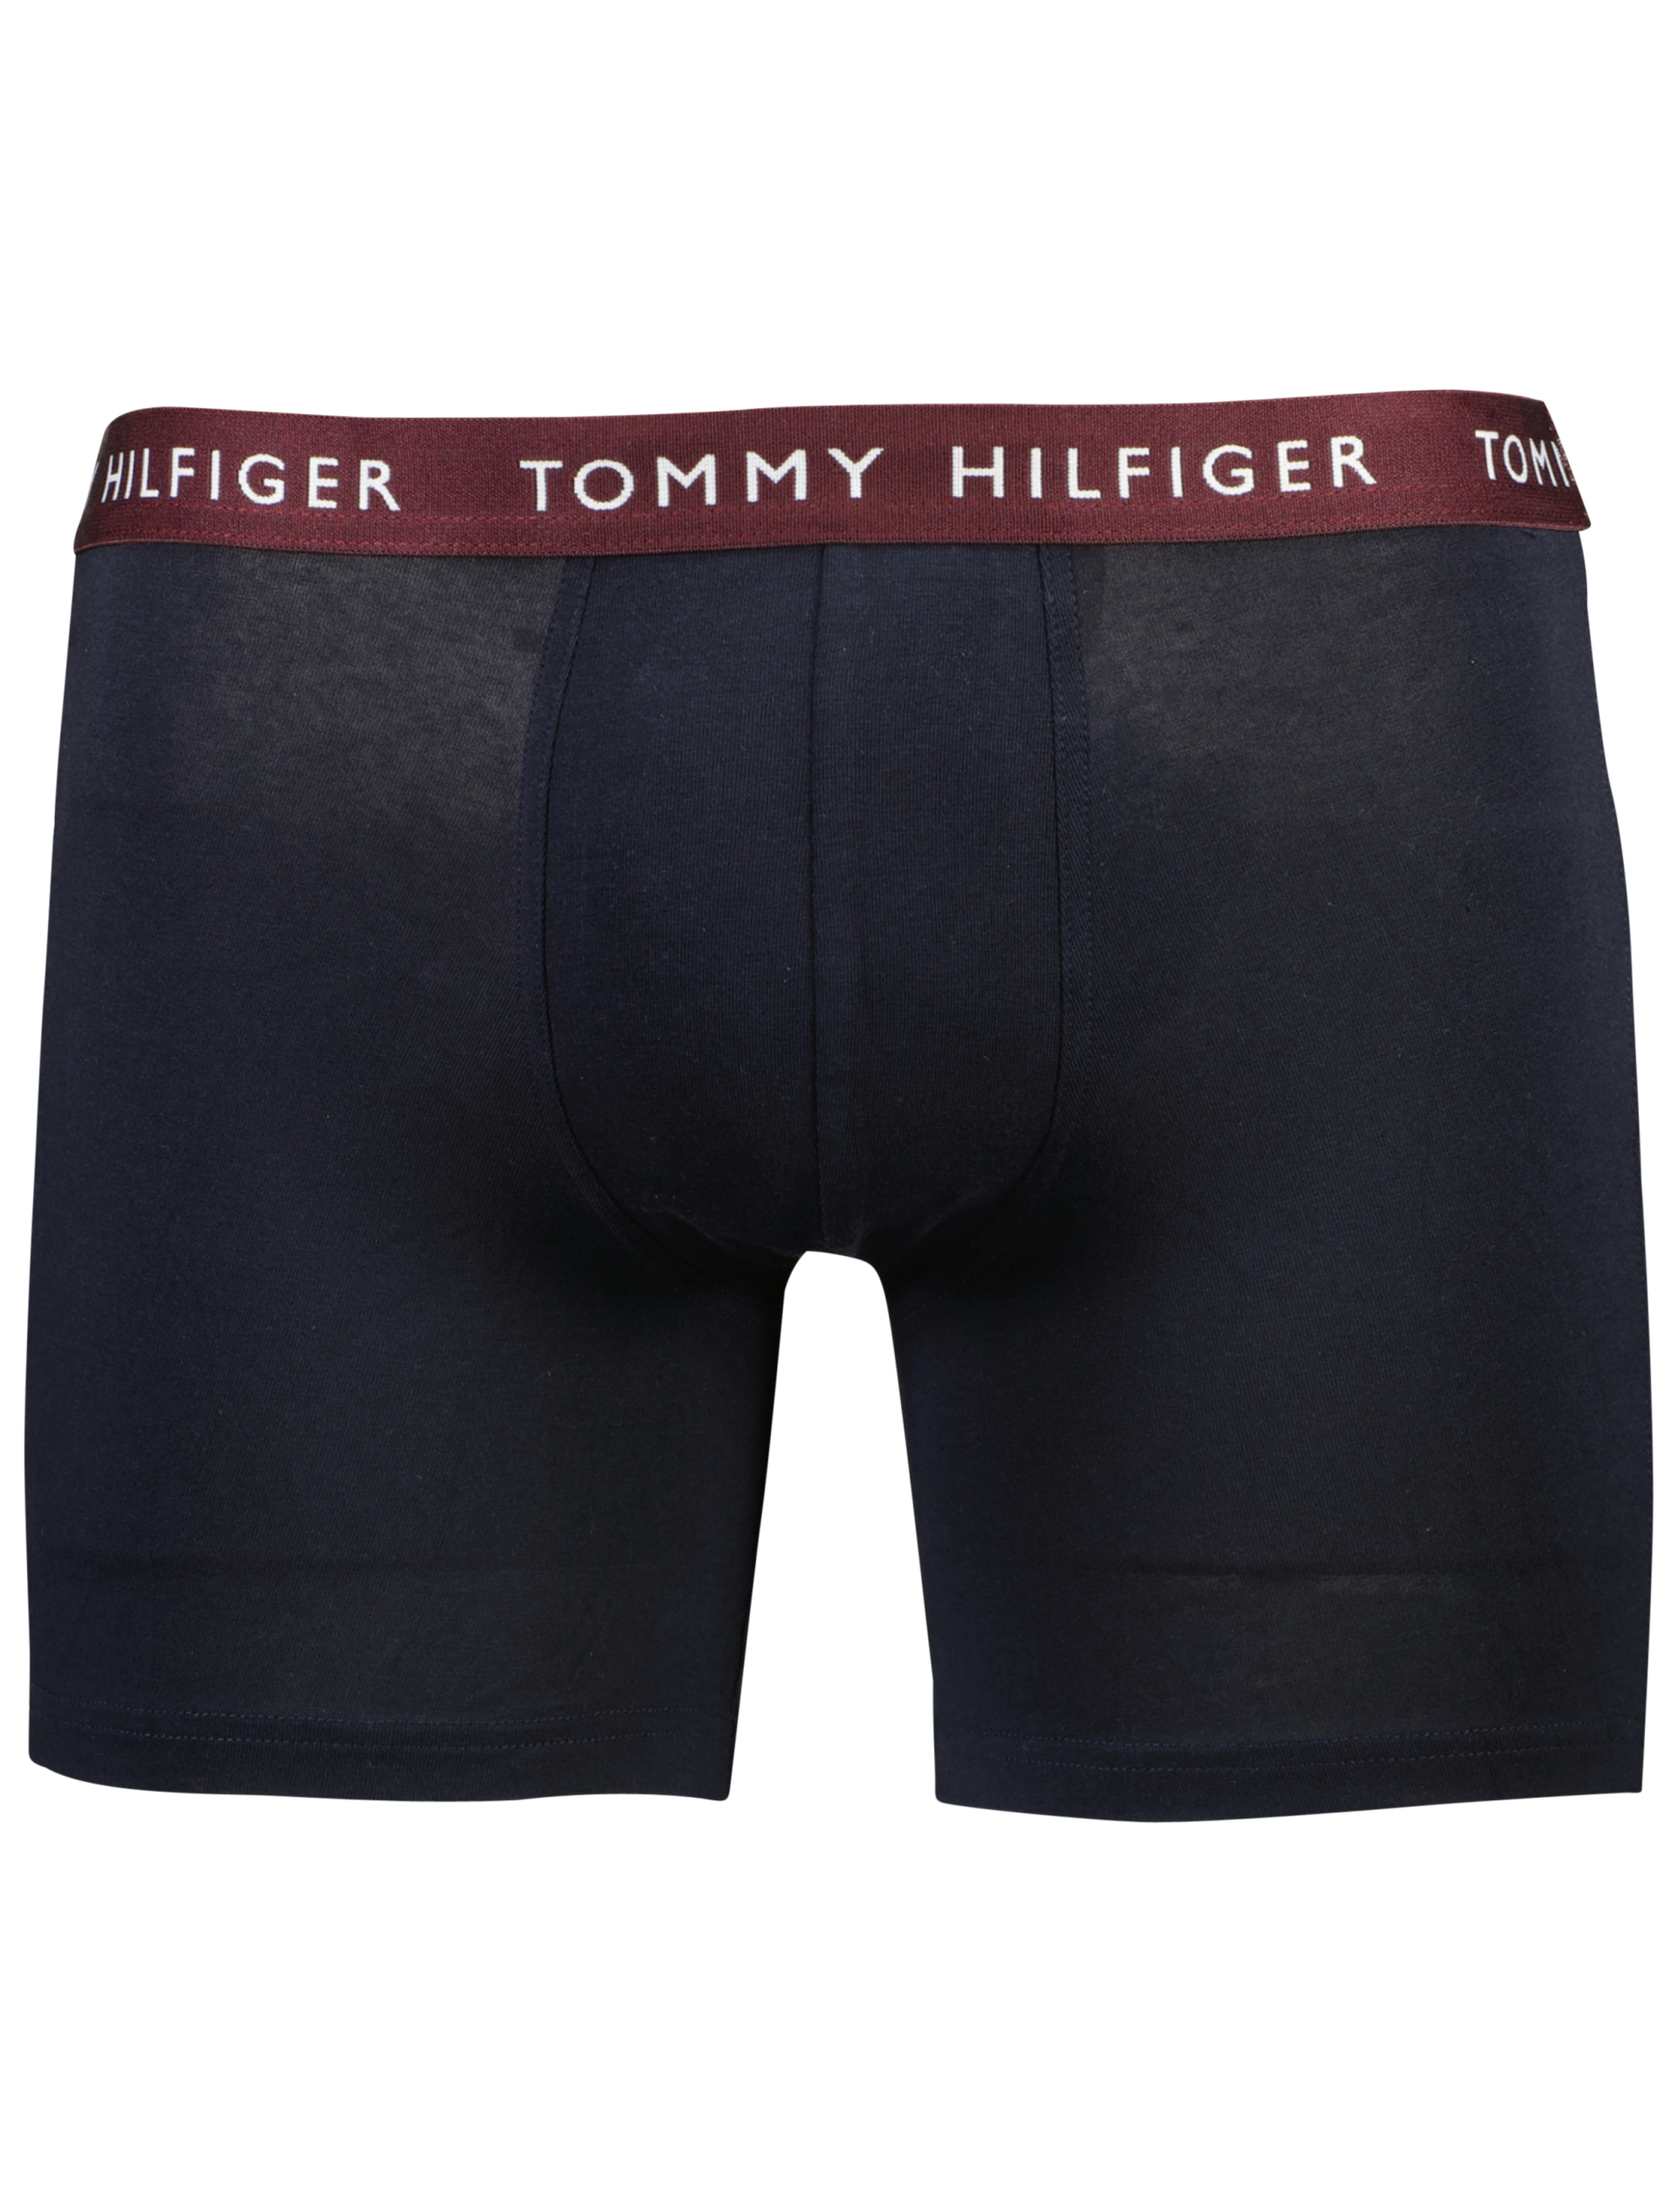 Tommy Hilfiger Tights blå / 0u7 navy